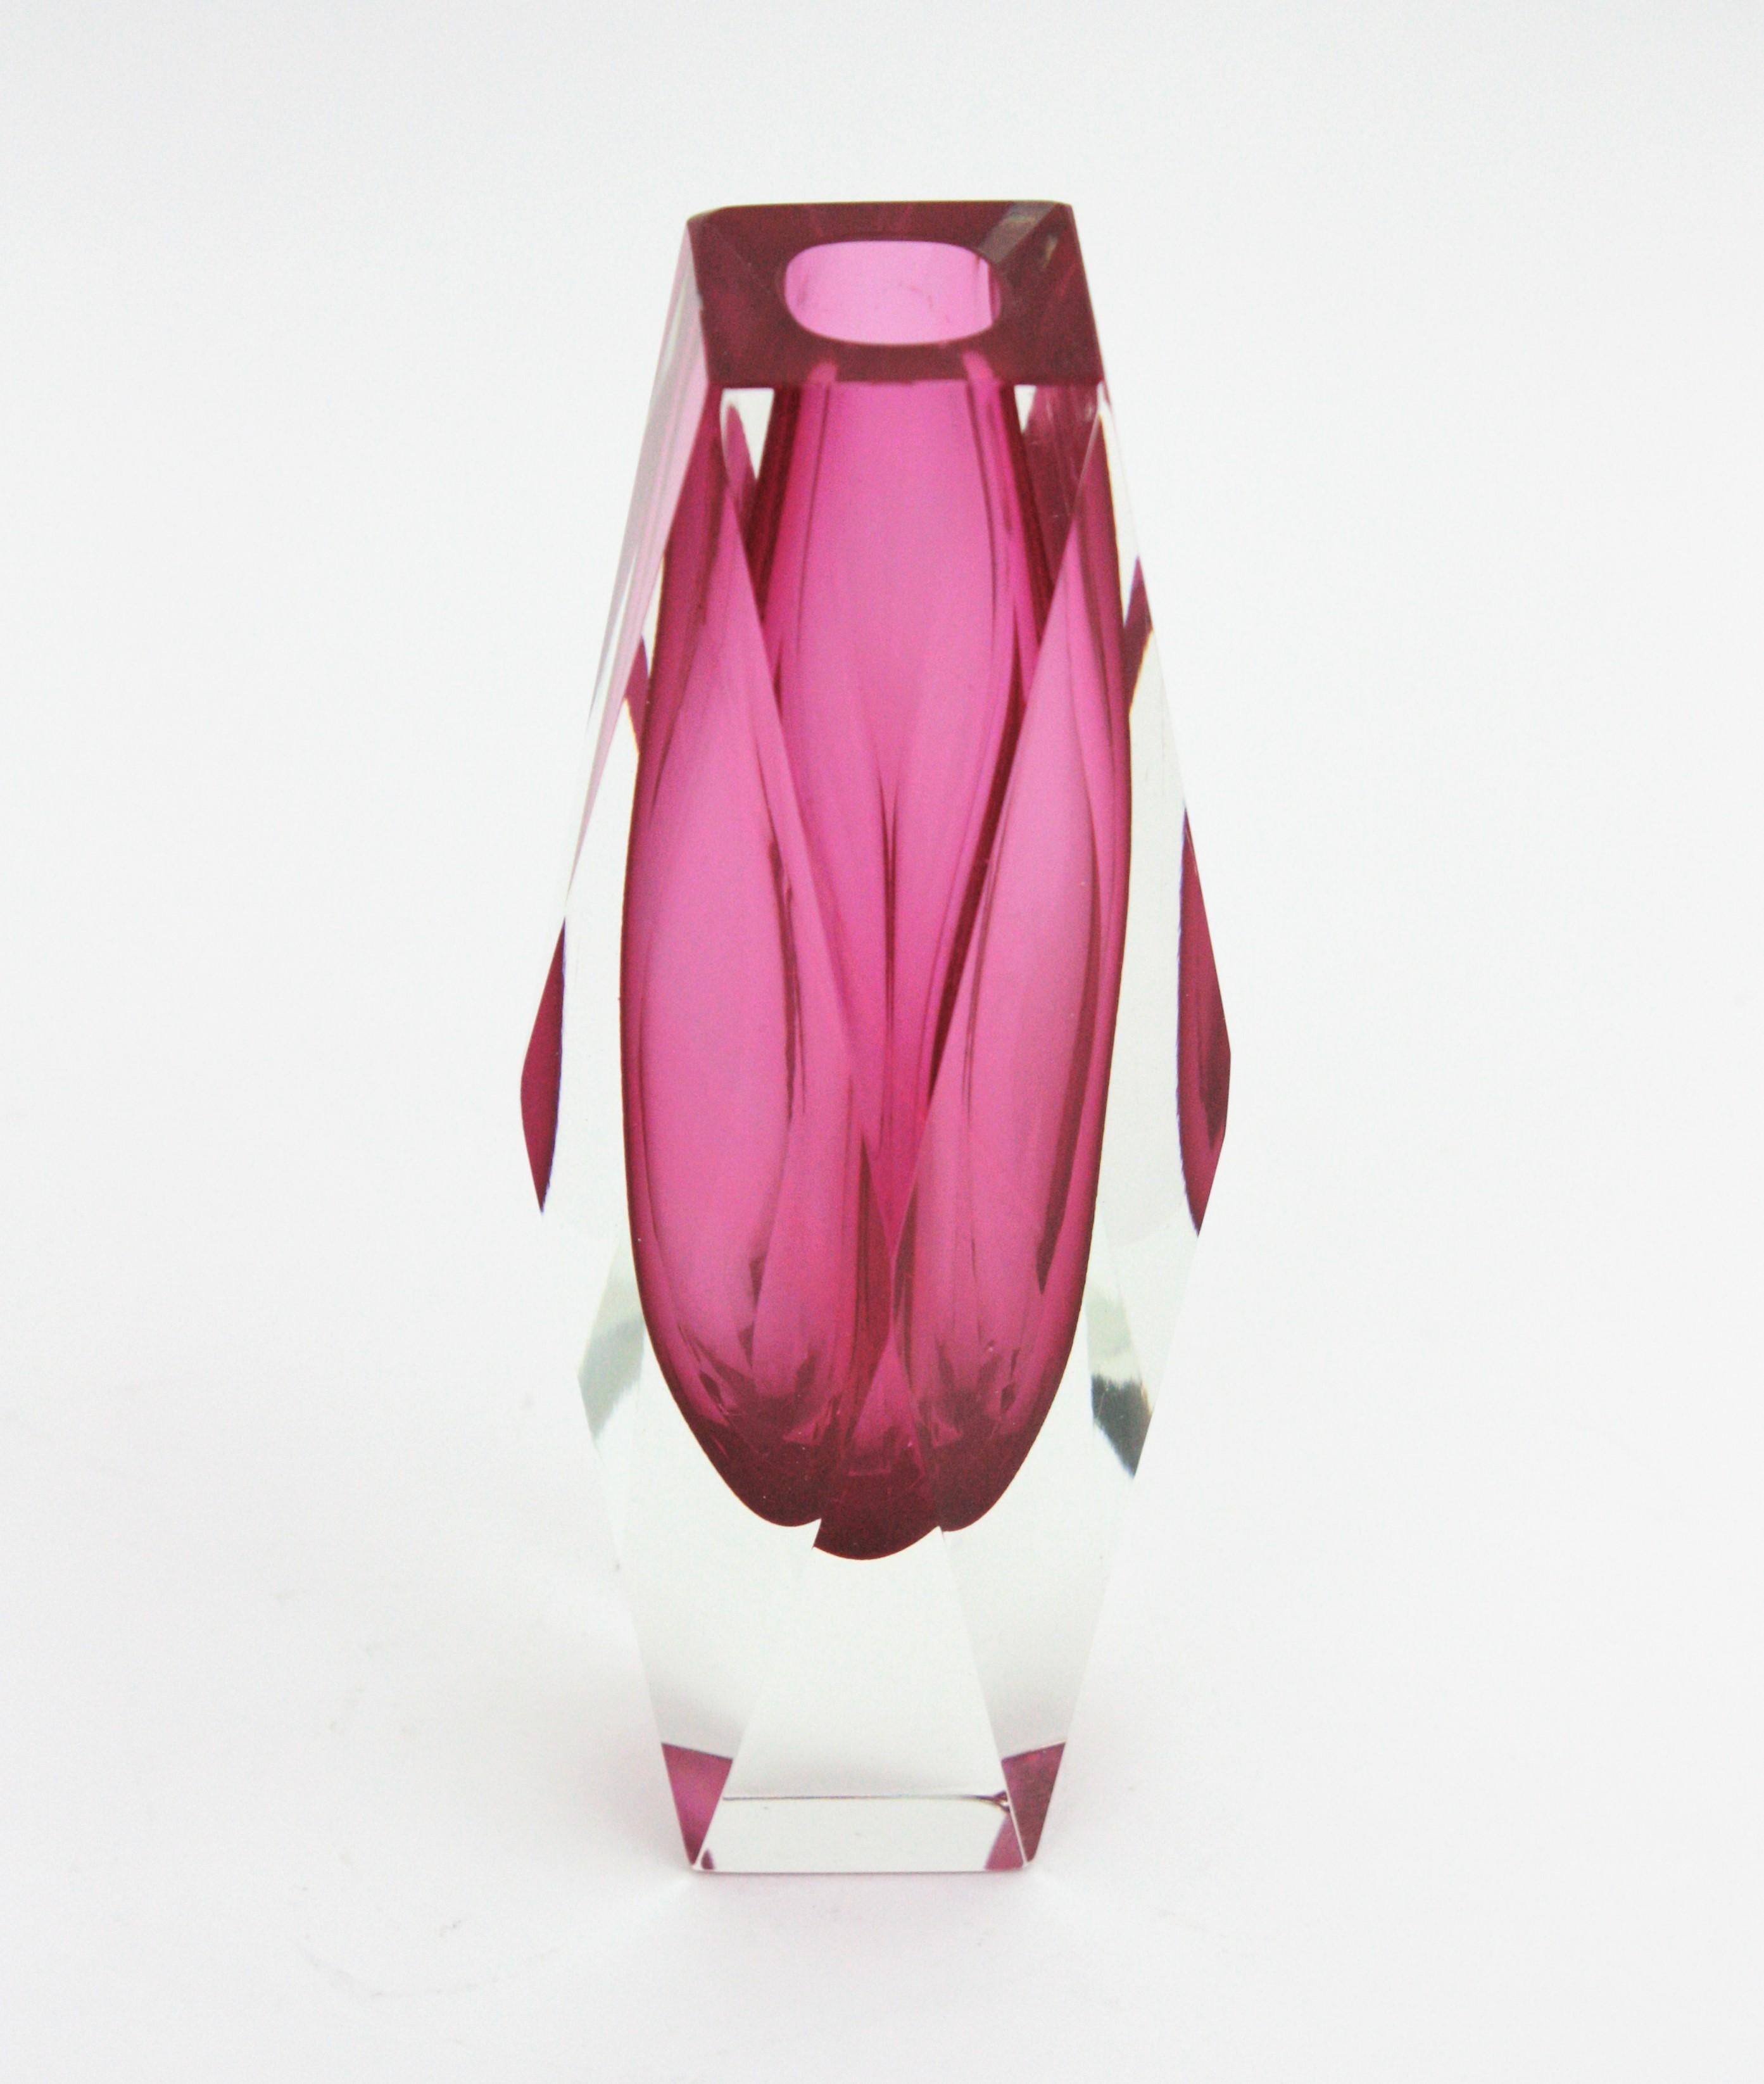 Art Glass Mandruzzato Pink Murano Sommerso Faceted Vase